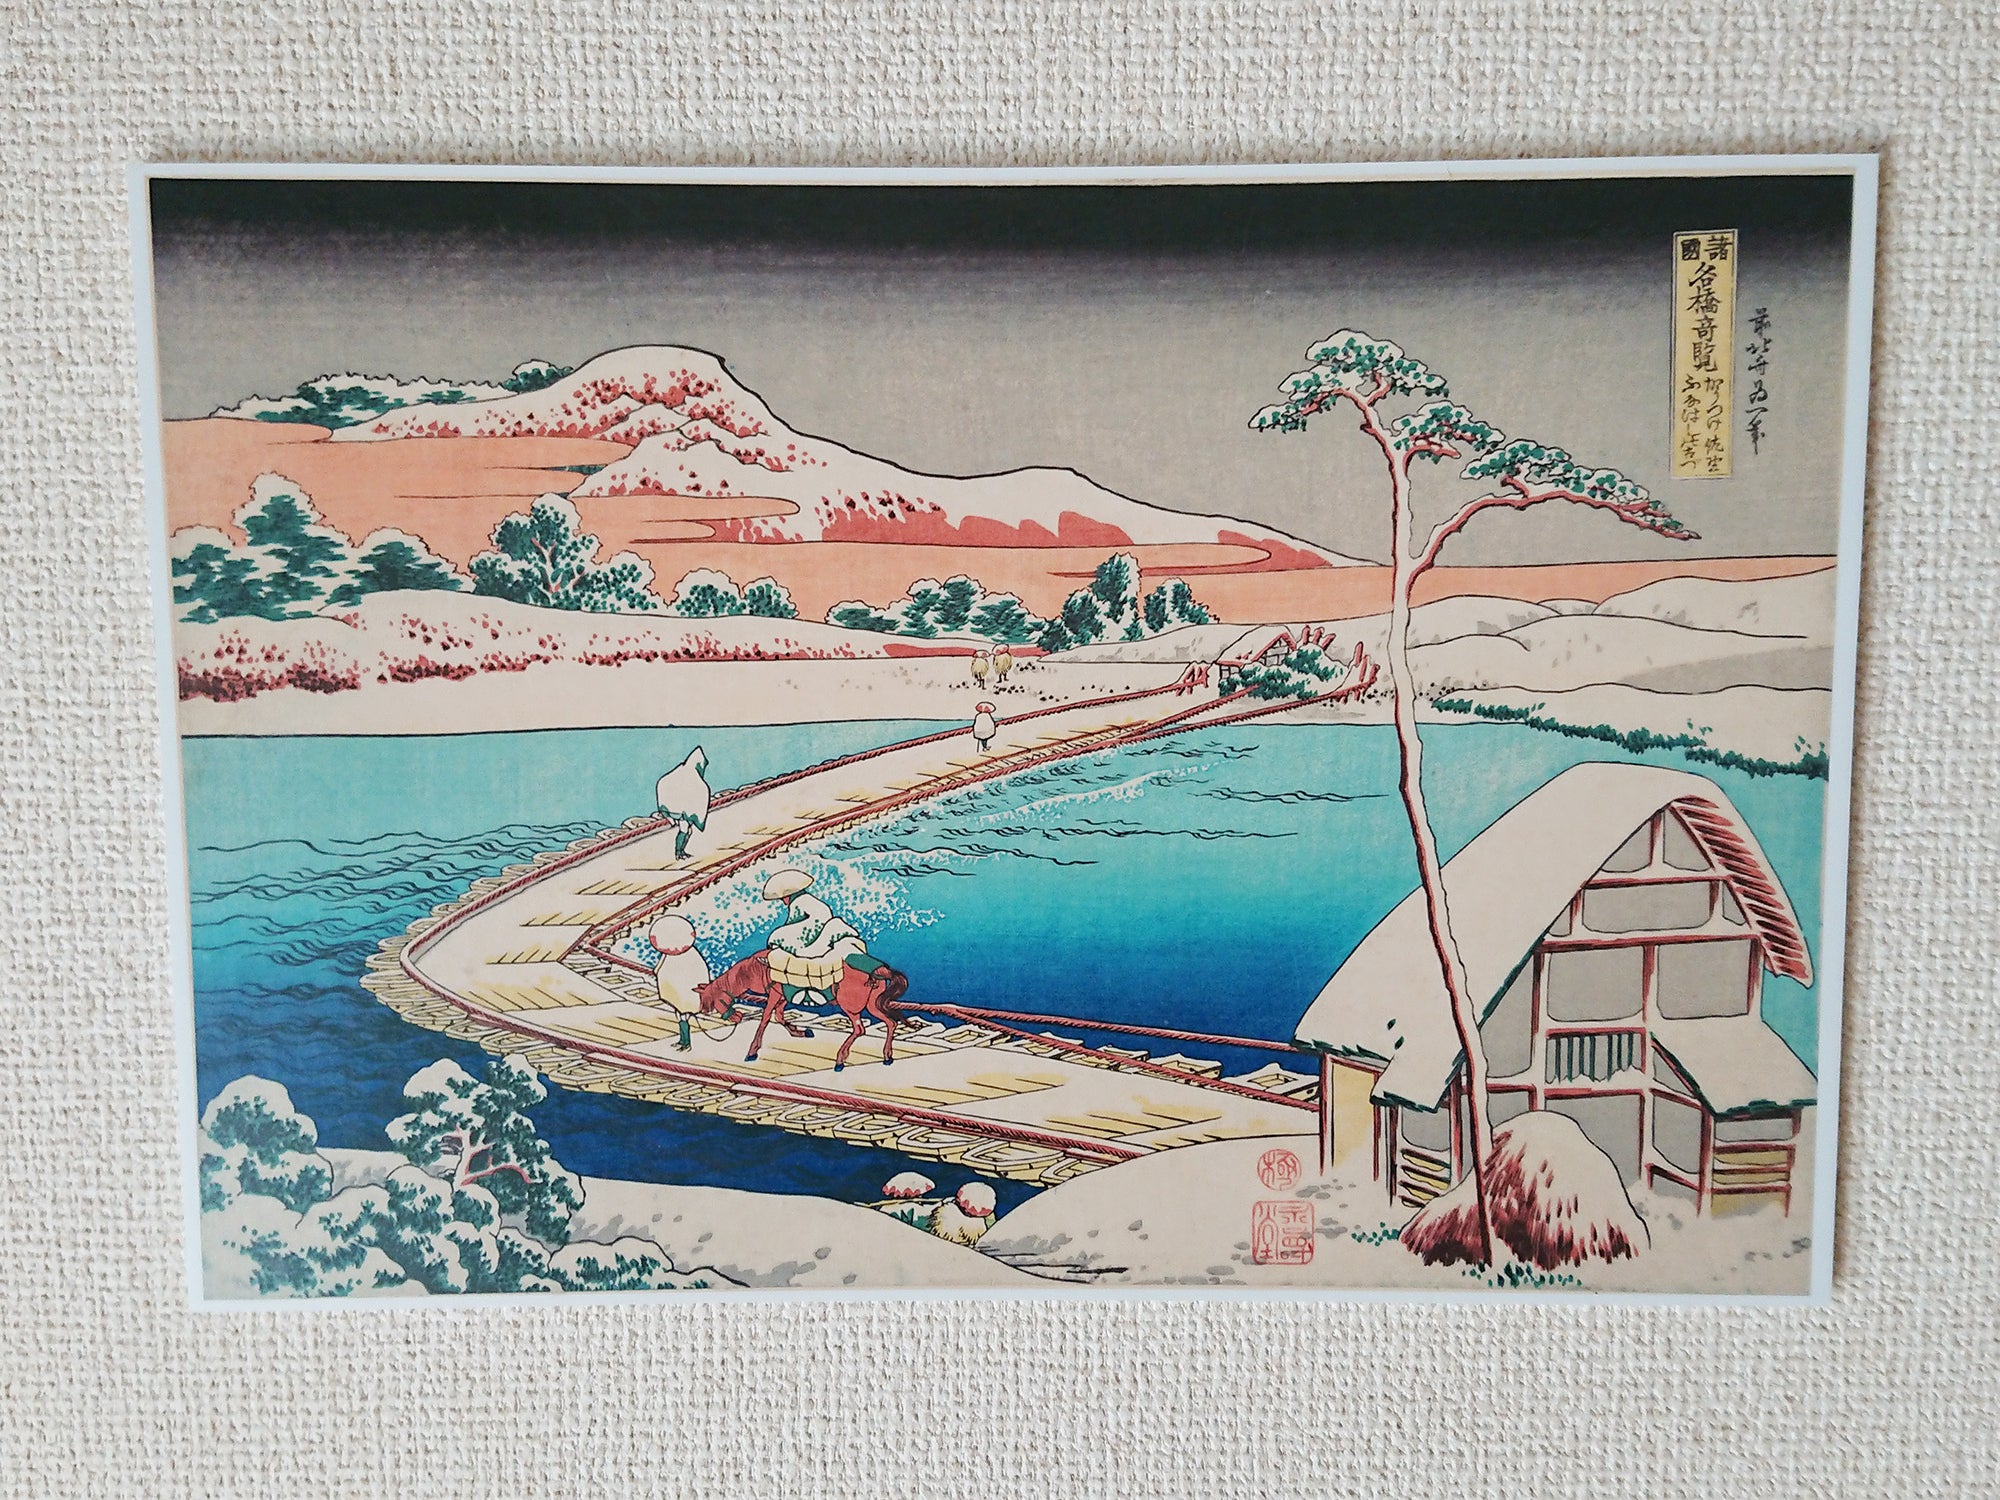 Wall panel of Ukiyo-e "Old View of Funabashi" by famous Japanese painter "Katsushika Hokusai"